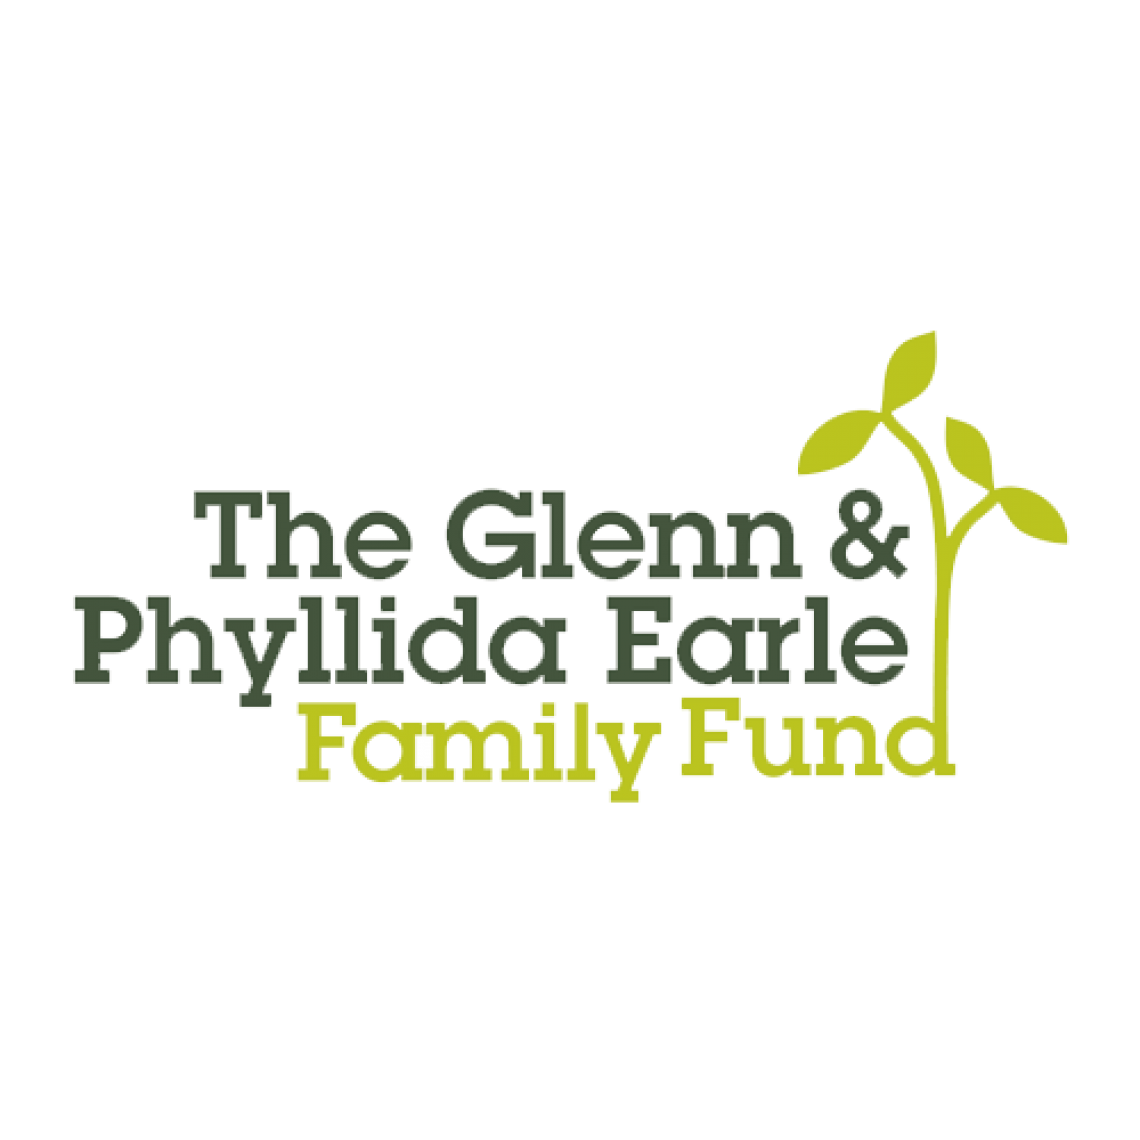 The Glenn & Phyllida Earle Family Fund